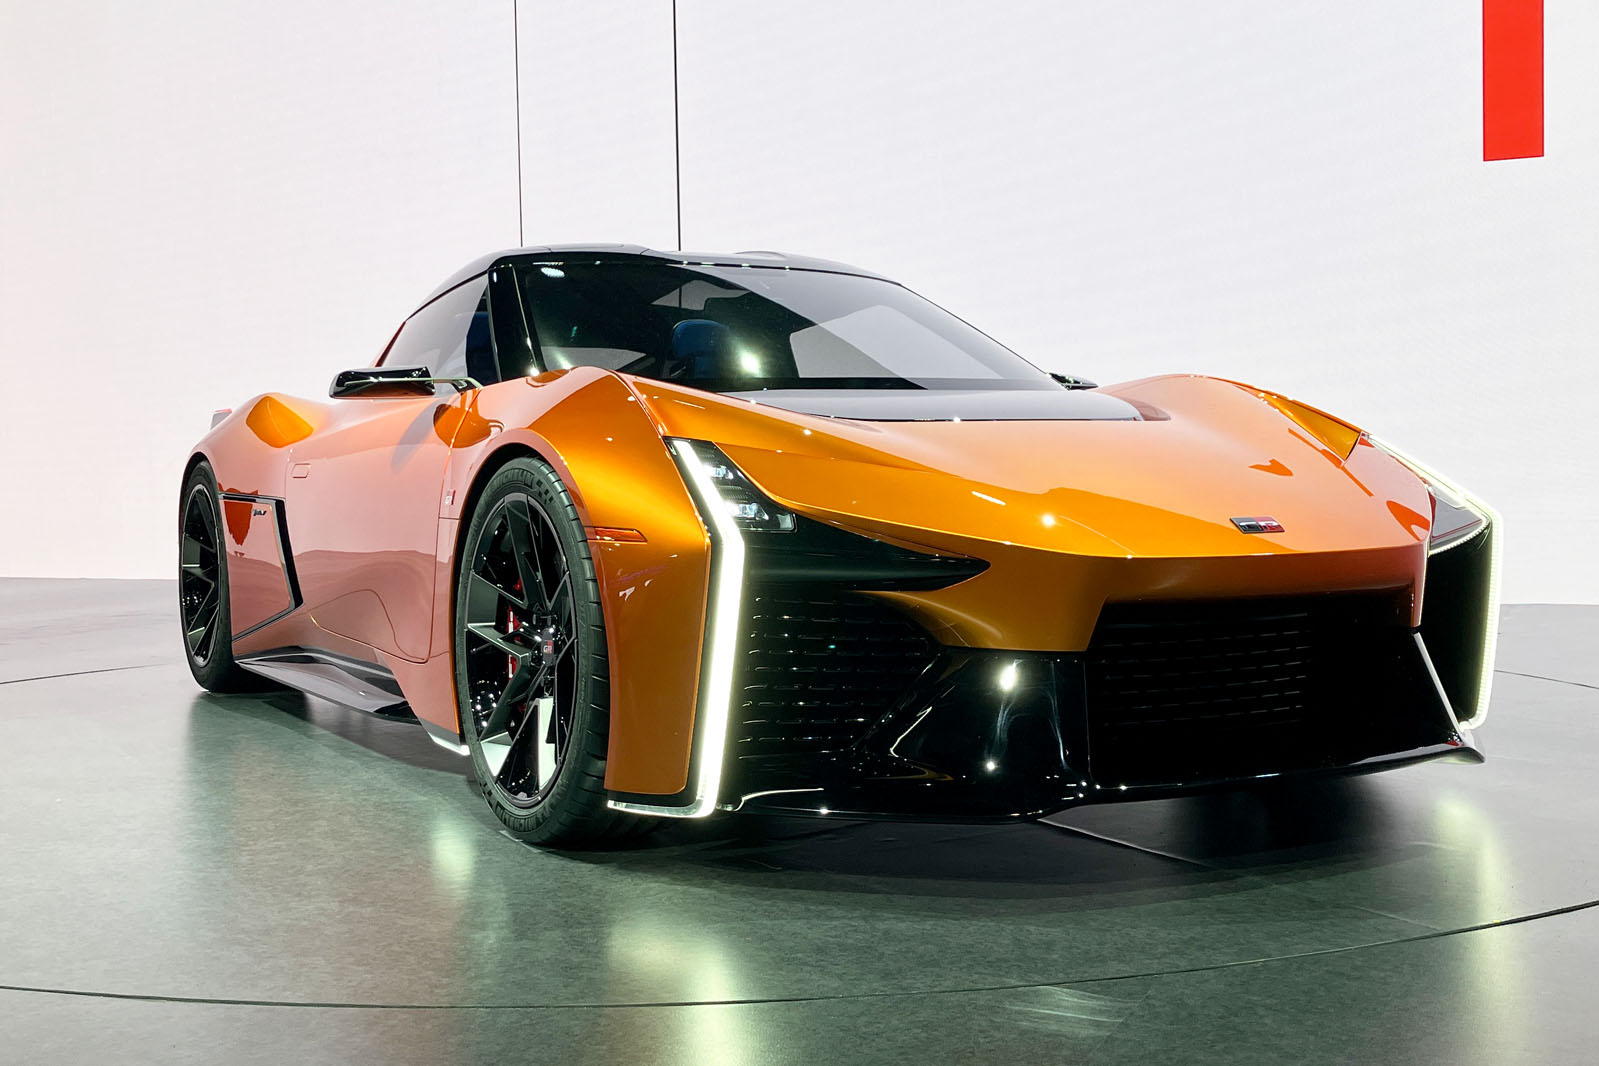 Toyota sports car concept imagines electric MR2 successor